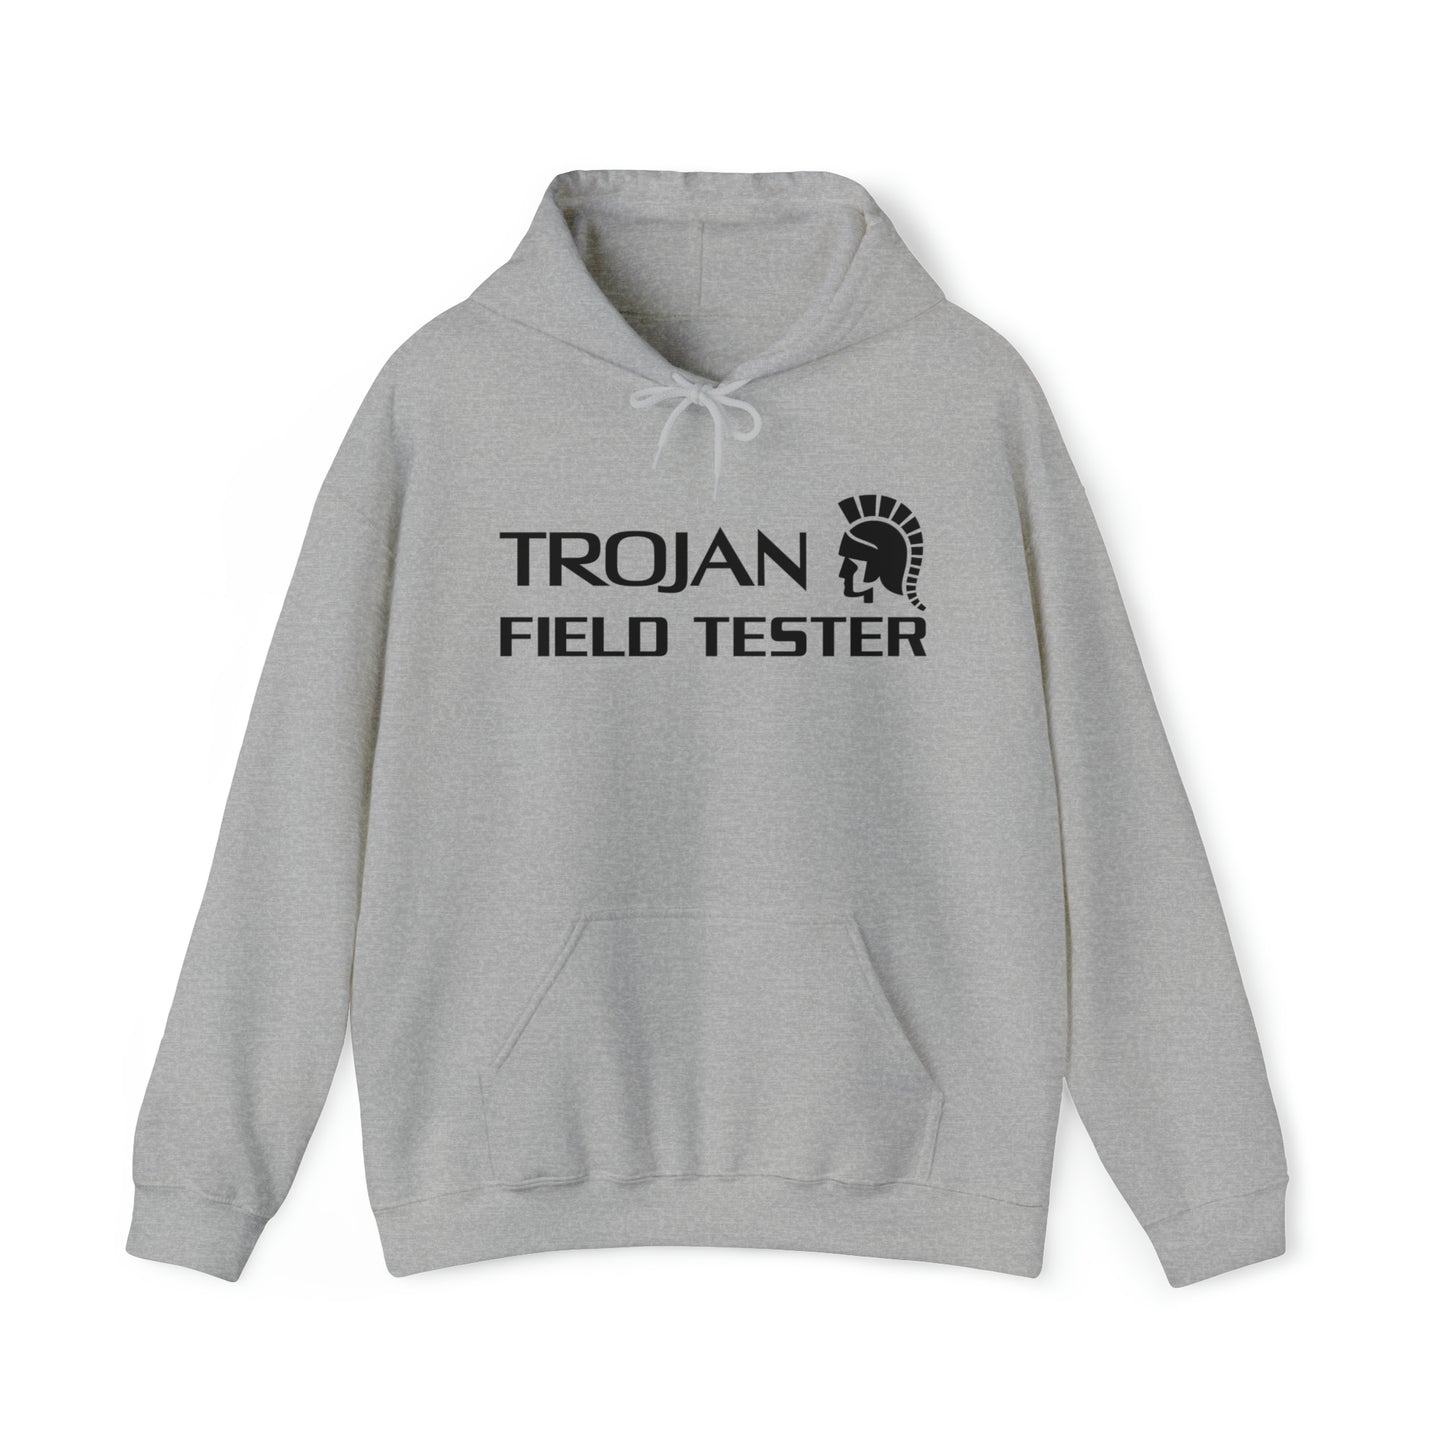 Trojan Field Tester Hoodie